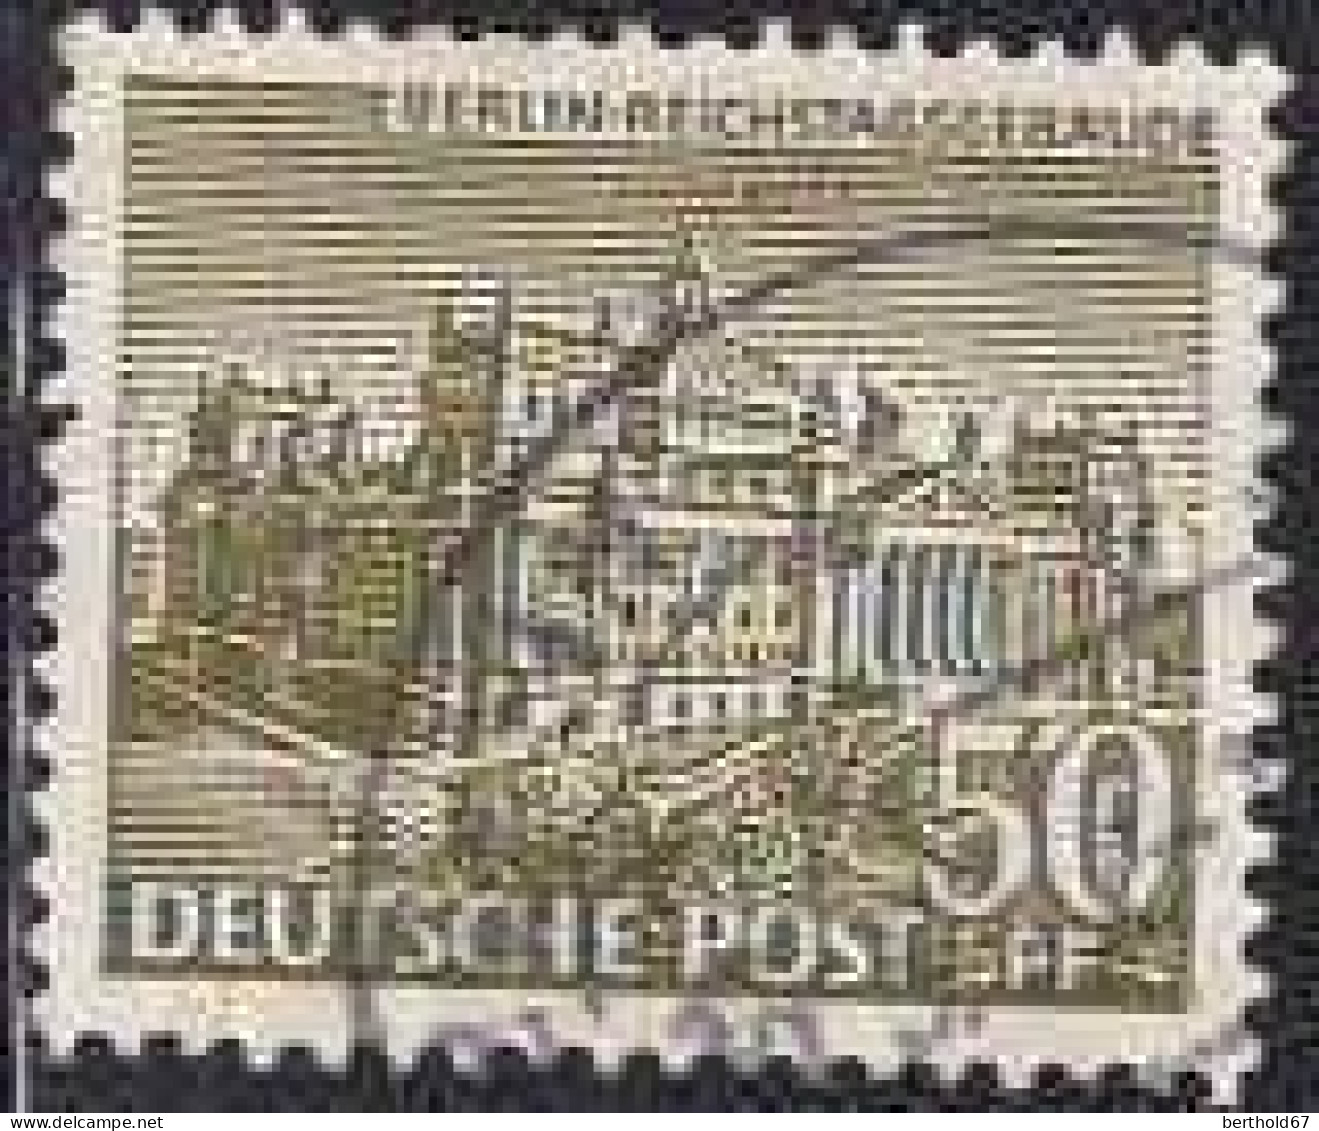 Berlin Poste Obl Yv: 39 Mi:53 Berlin-Reichstagsgebäude (Beau Cachet Rond) - Used Stamps